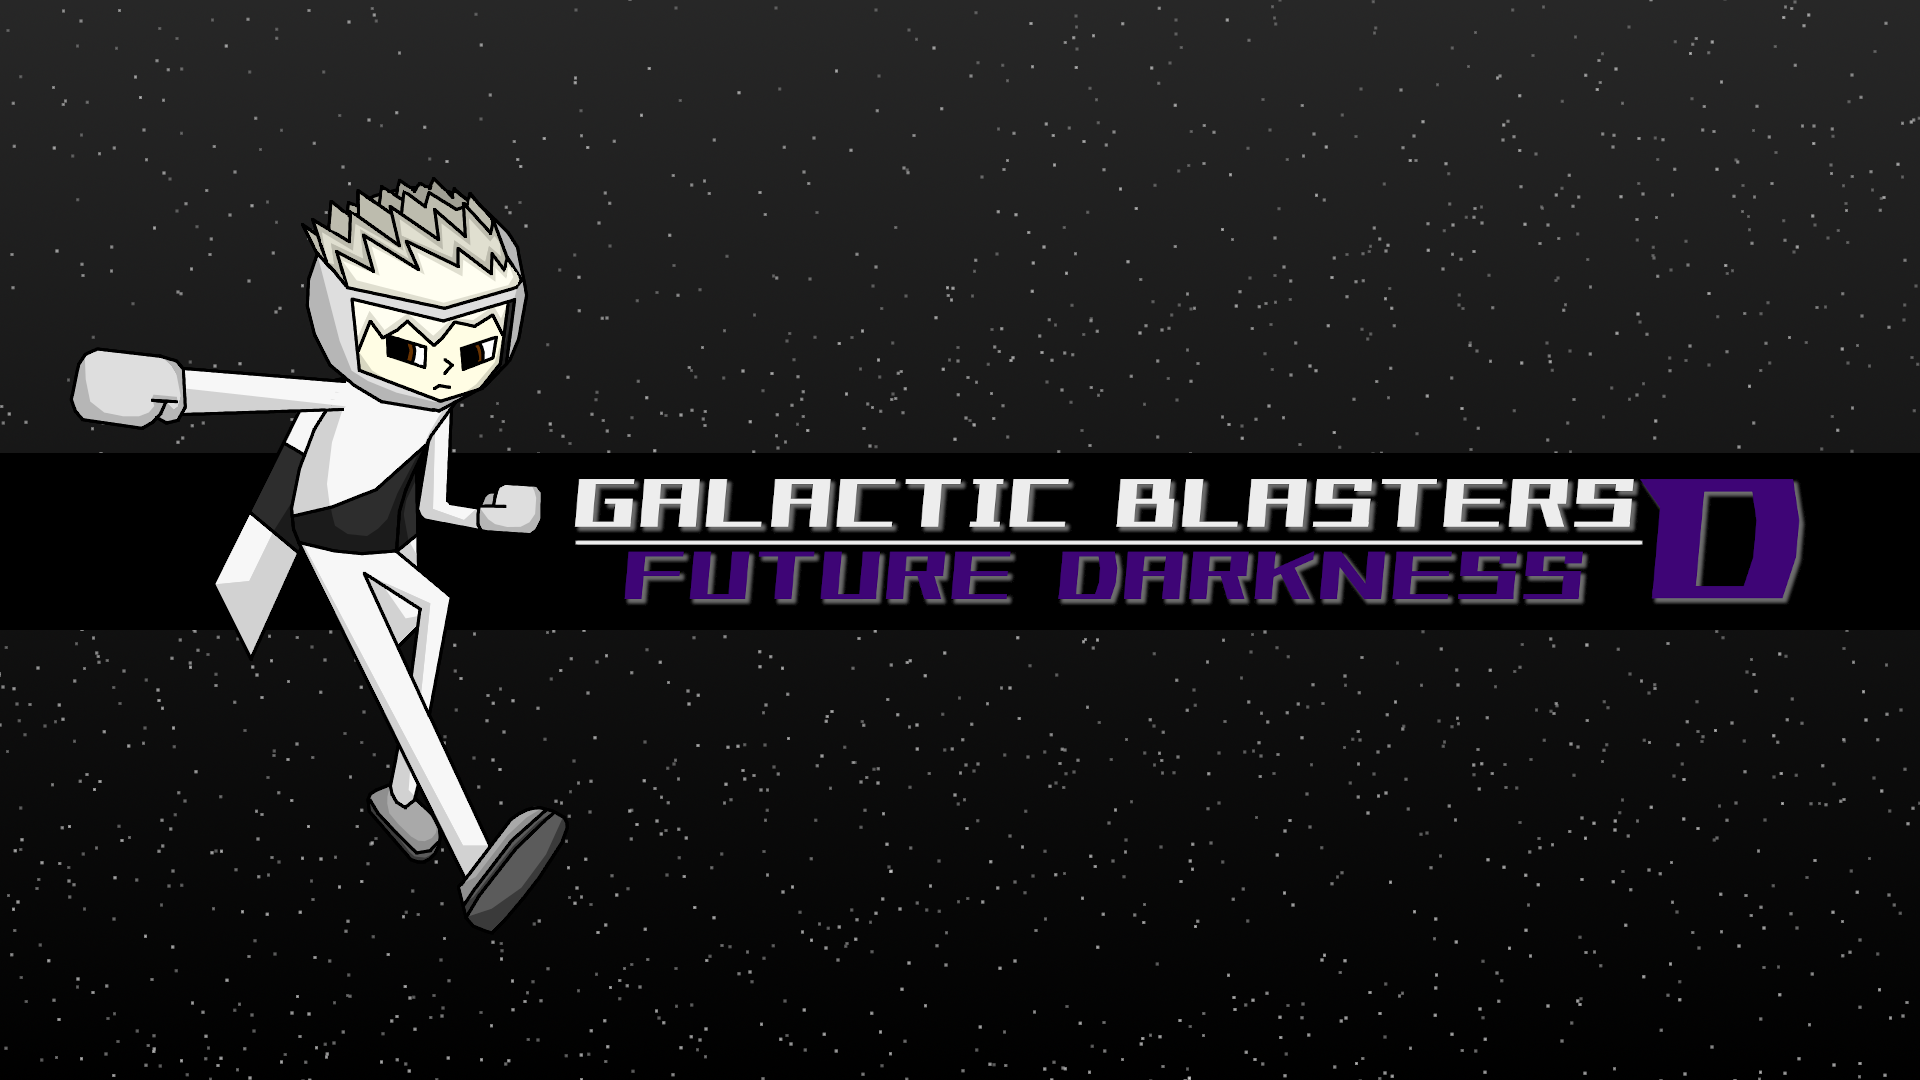 Galactic Blasters D - Future Darkness